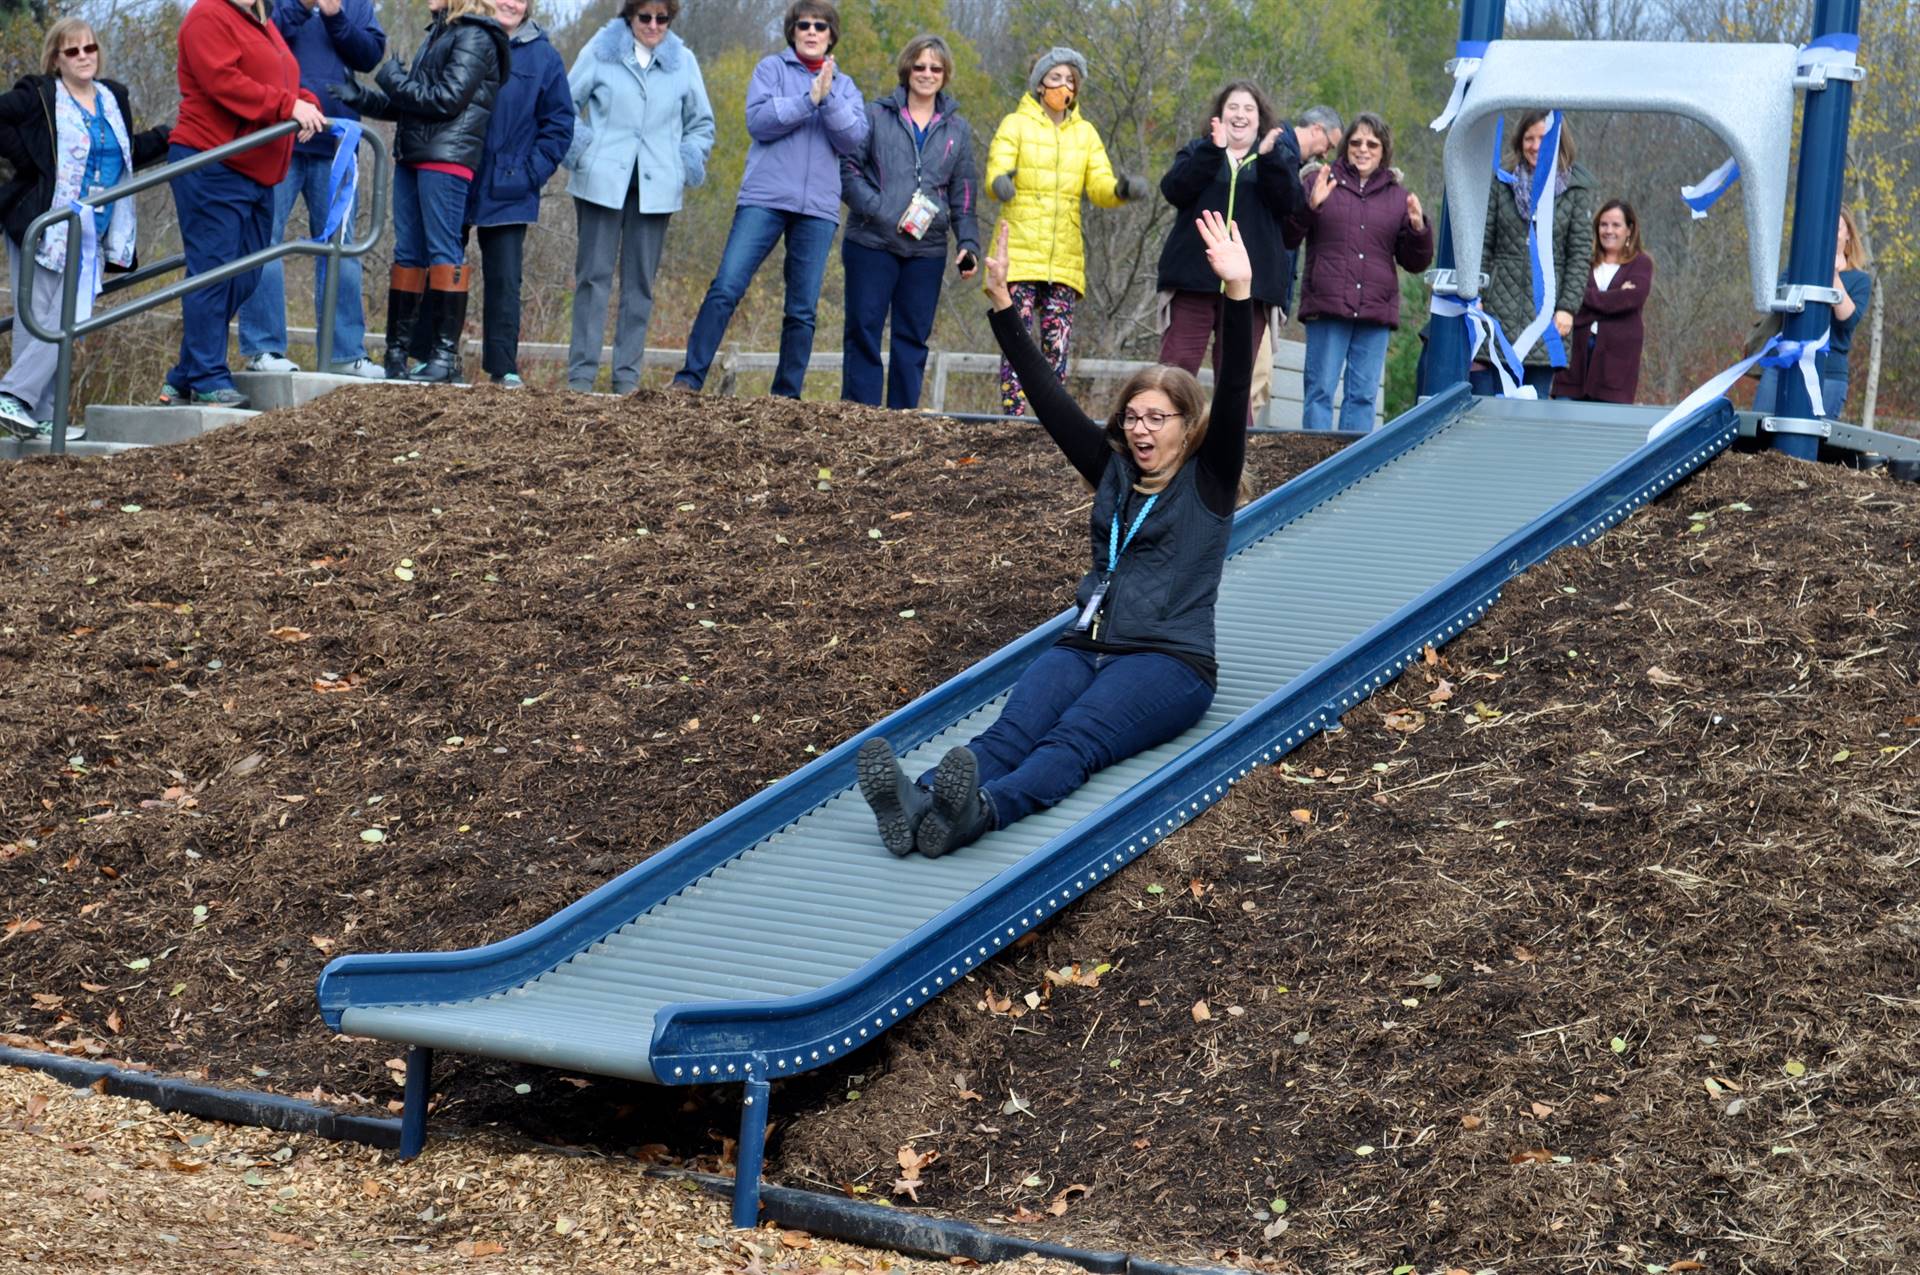 Mrs. Maynard, school principal having fun going down that slide.